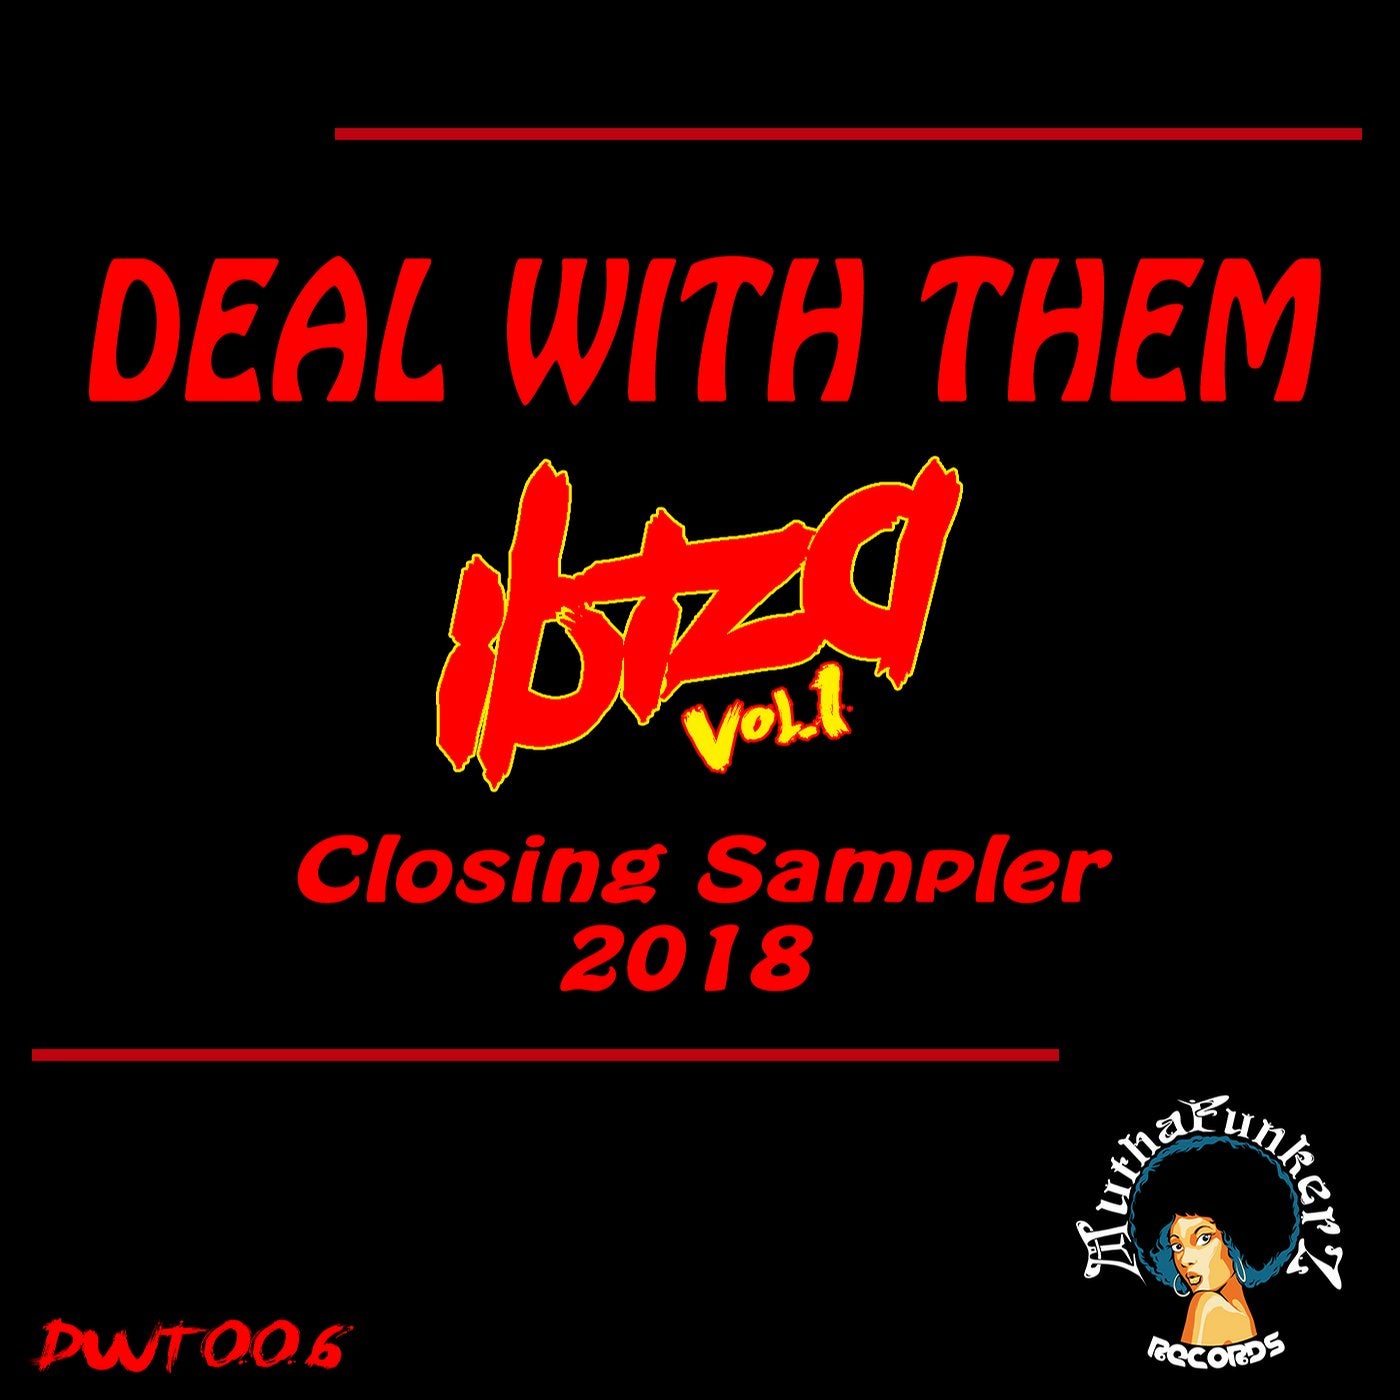 Deal With Them. IBIZA Closing Sampler Vol.1